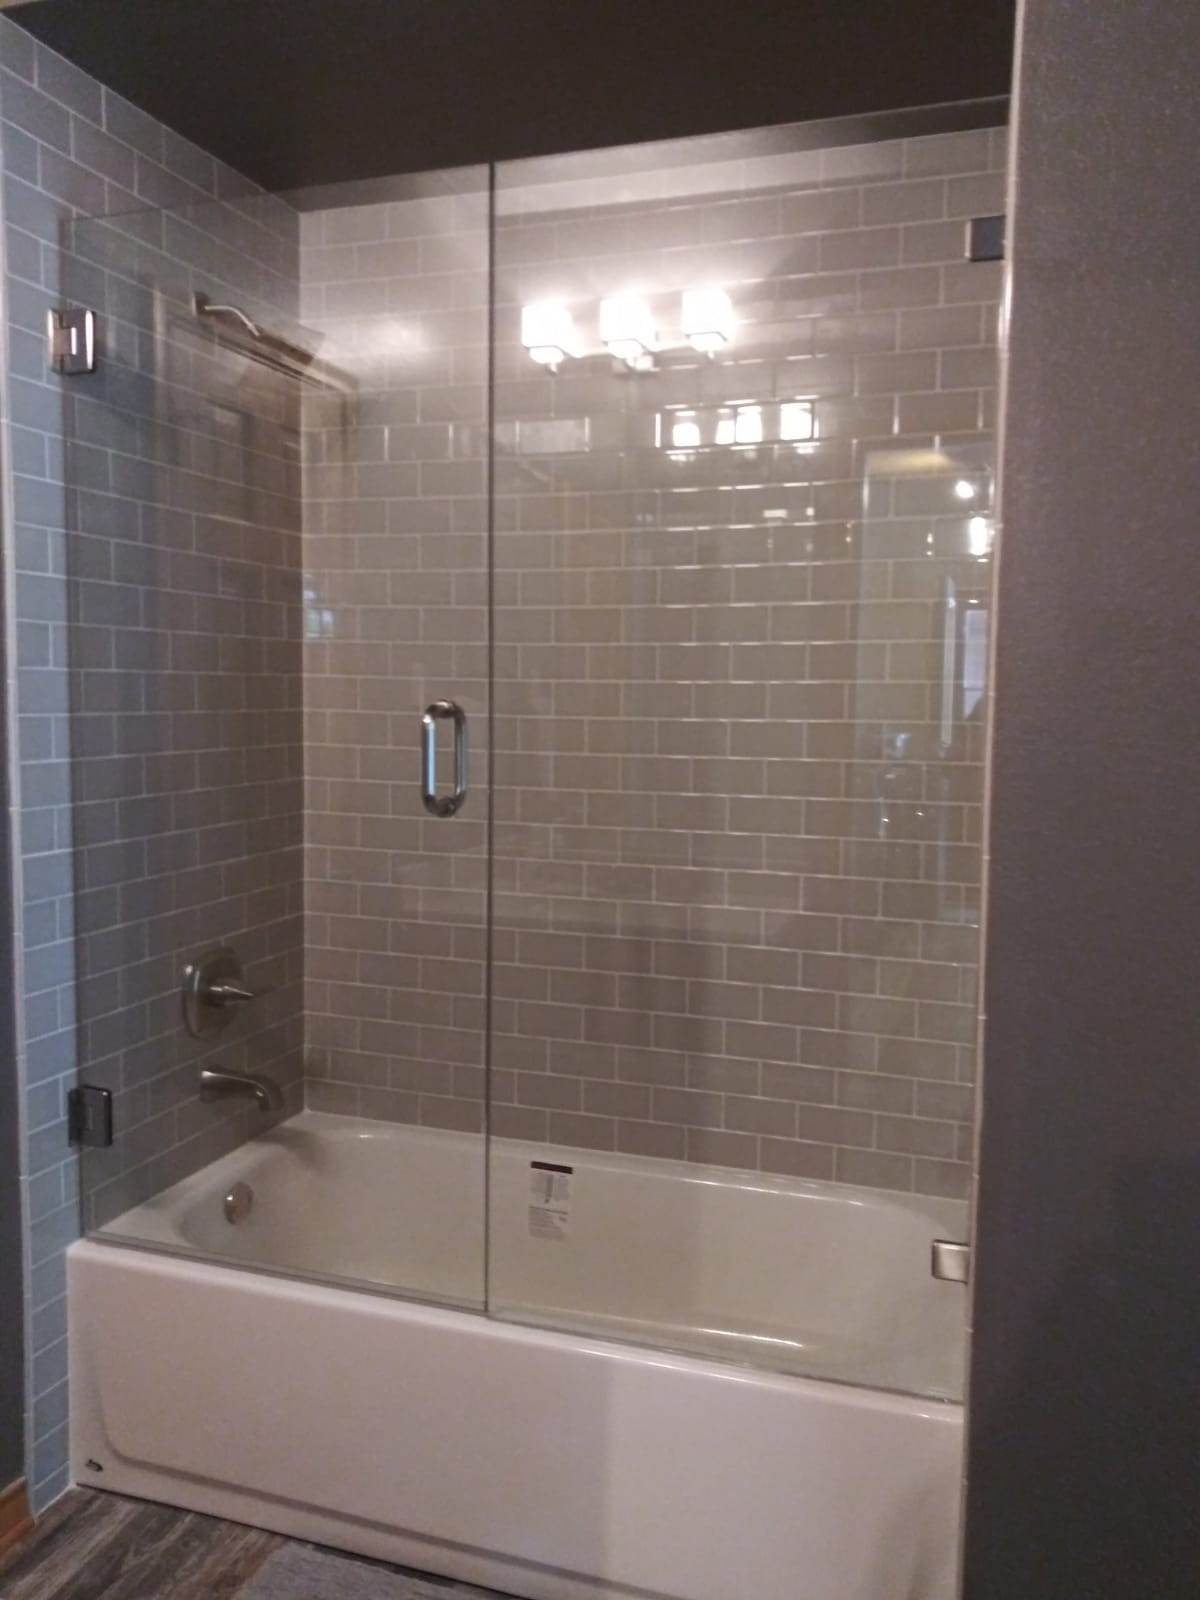 Quality Custom Glass Doors Services In Texas - Plano Bath Llc